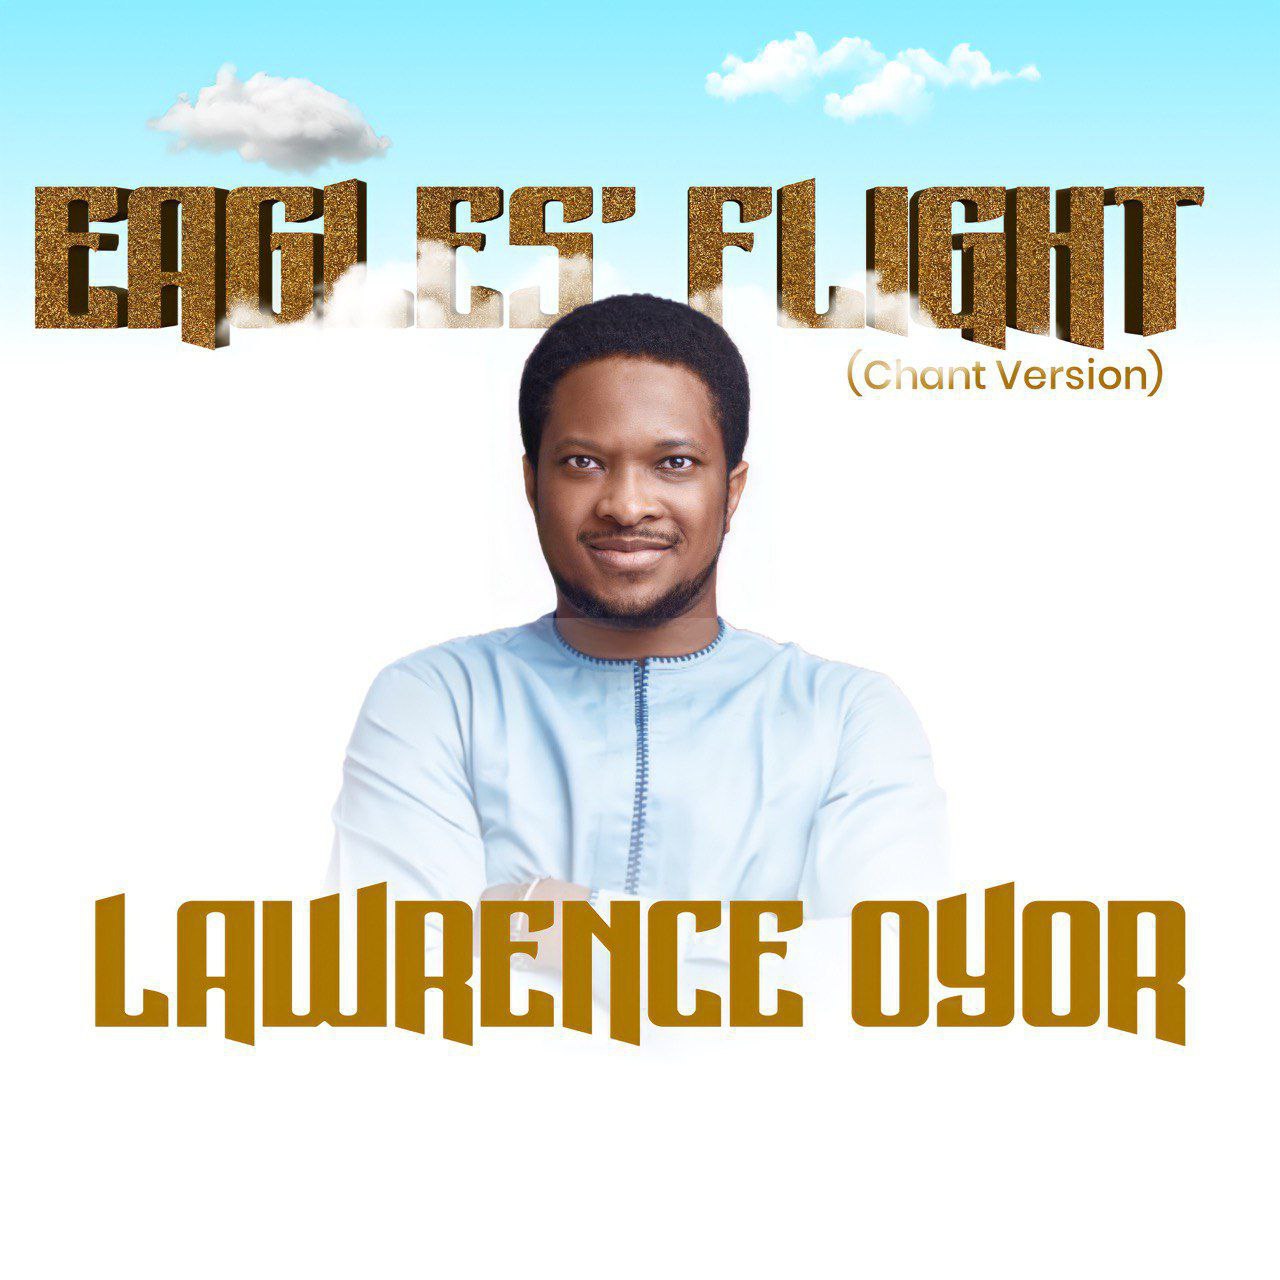 [Music] Lawrence Oyor – Eagles Flight (Chant Version)